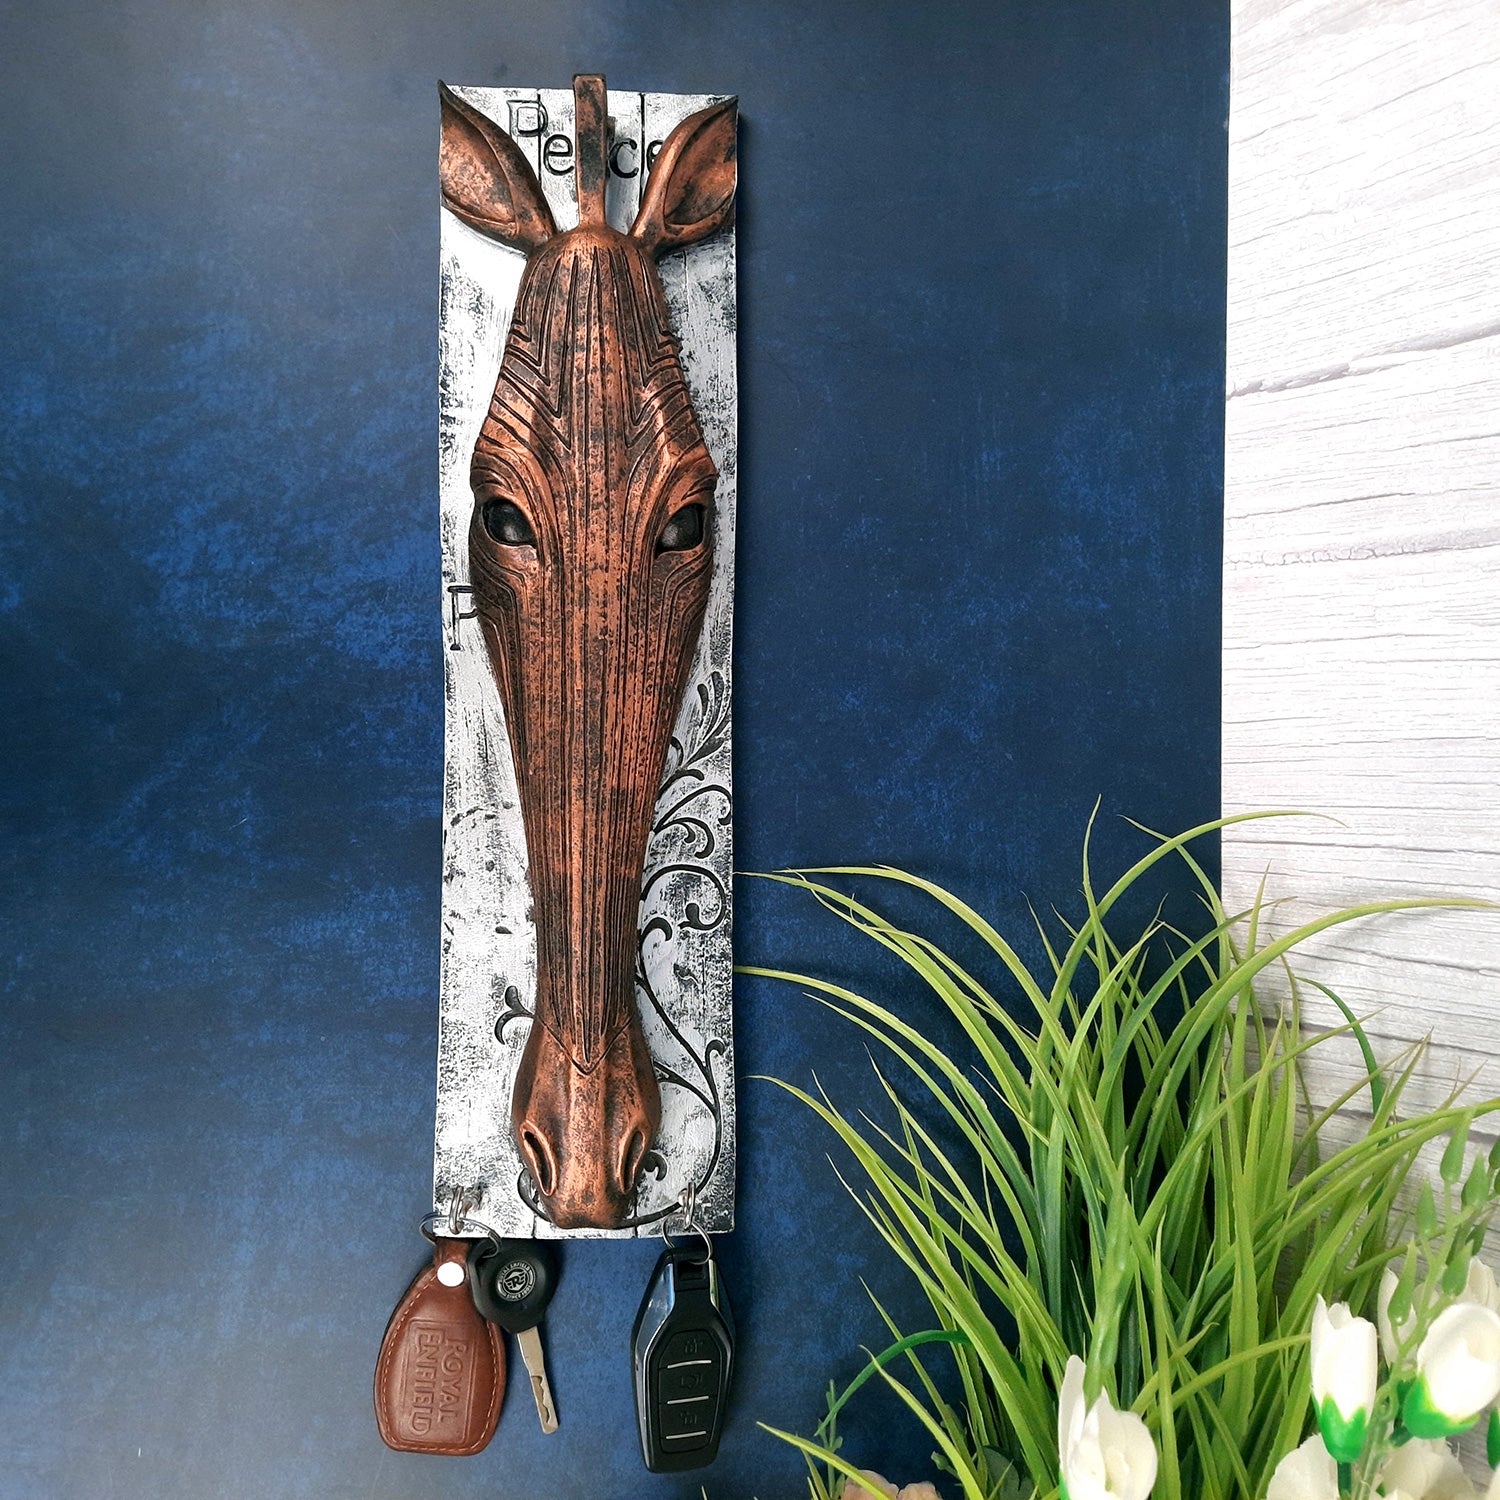 Key Holder Wall Hanging | Key Hook Hanger Stand - Giraffe Design  | Keys Organizer - For Home, Entrance, Office Decor & Gifts - 16 Inch (2 Hooks)